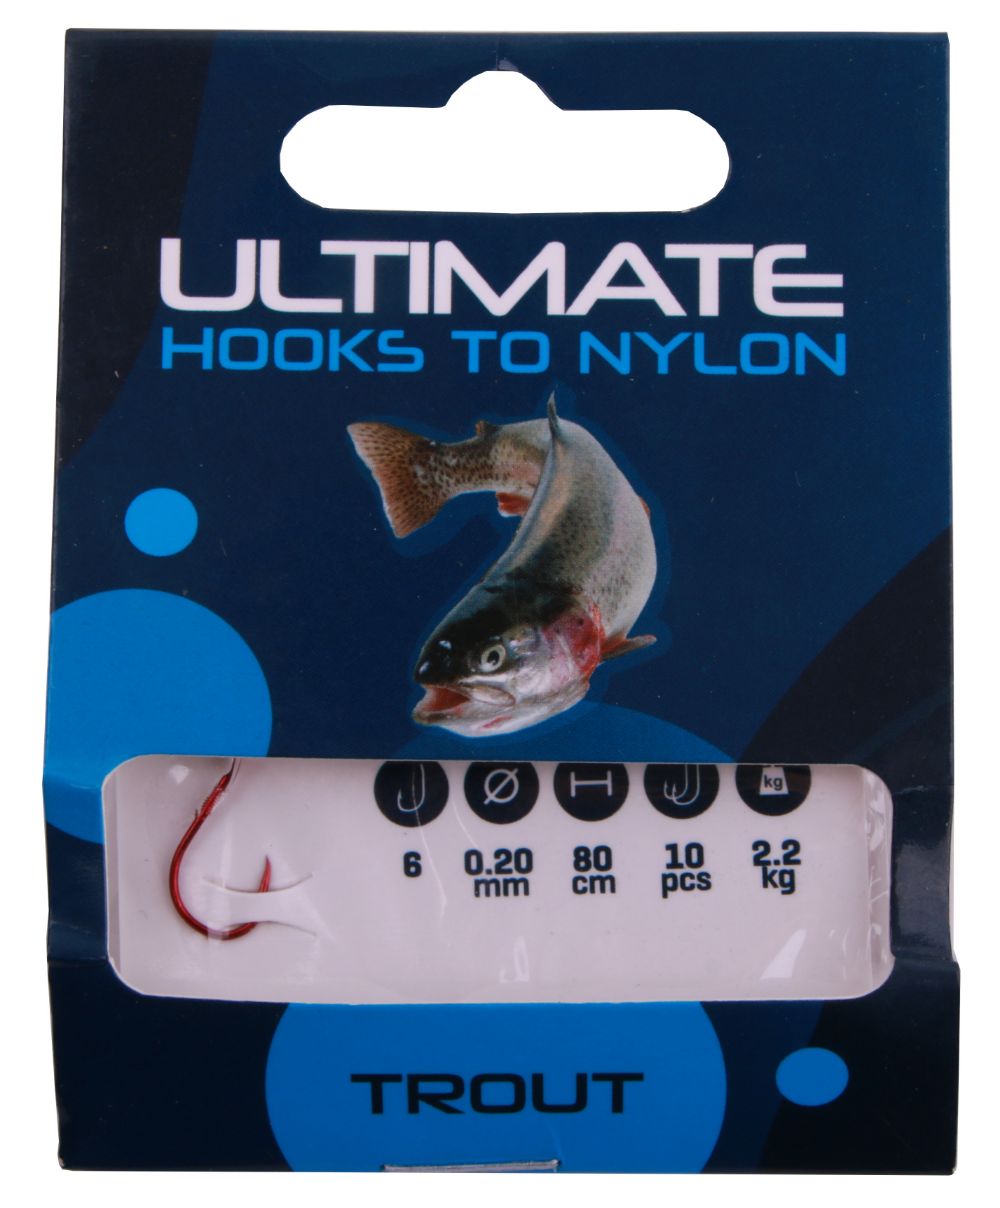 Ultimate hooks to nylon trout size 6 0,20mm 80cm 10pcs